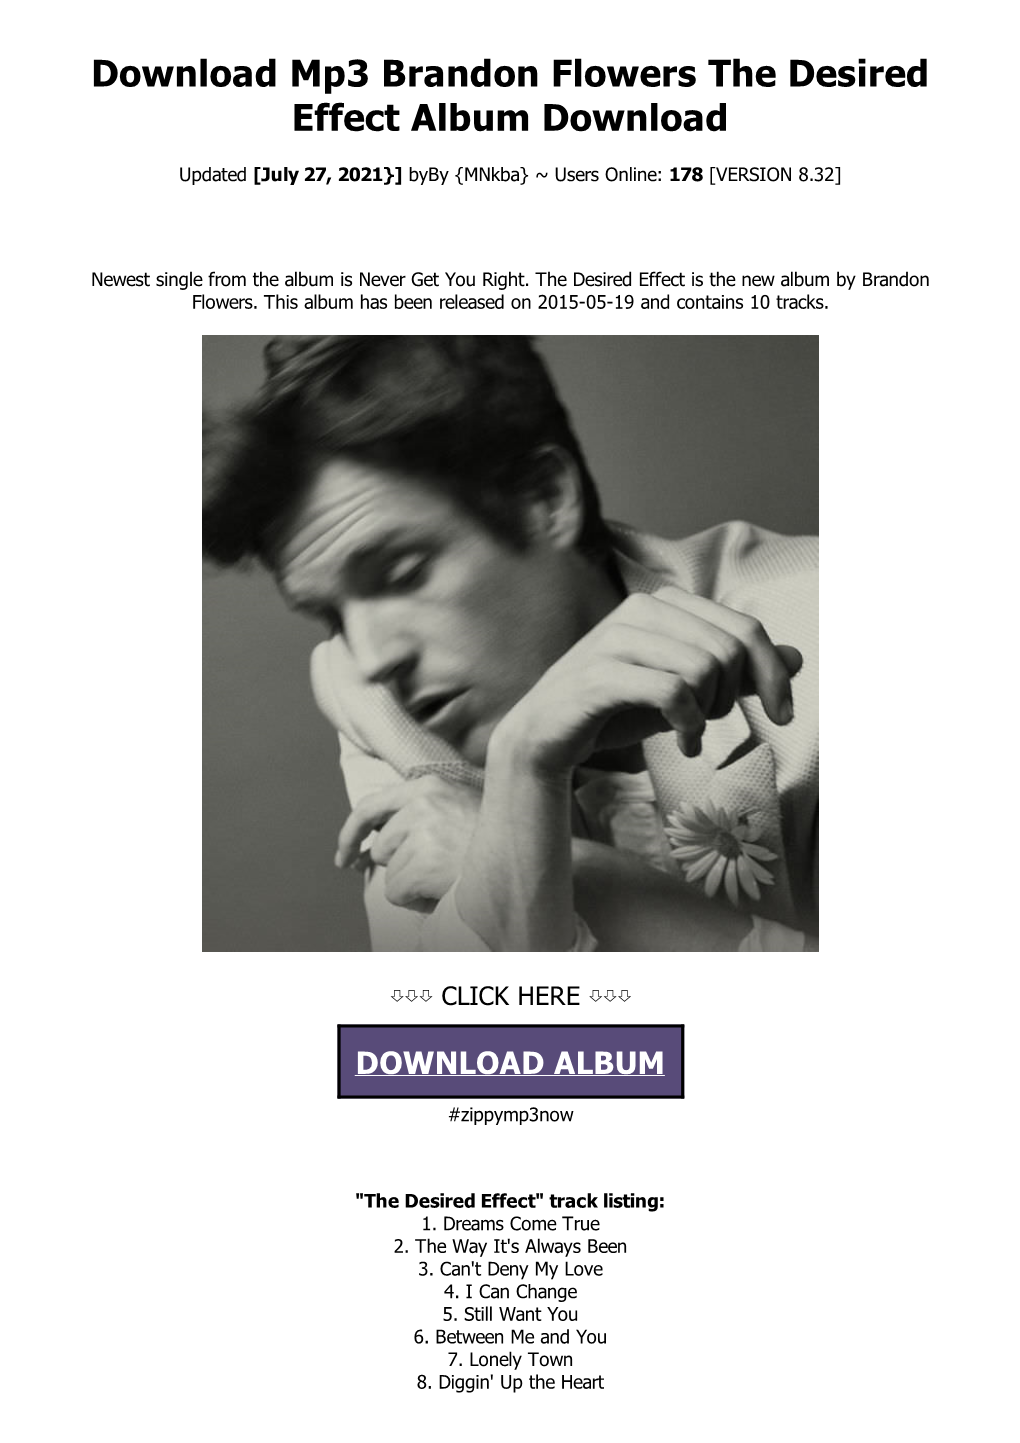 Download Mp3 Brandon Flowers the Desired Effect Album Download